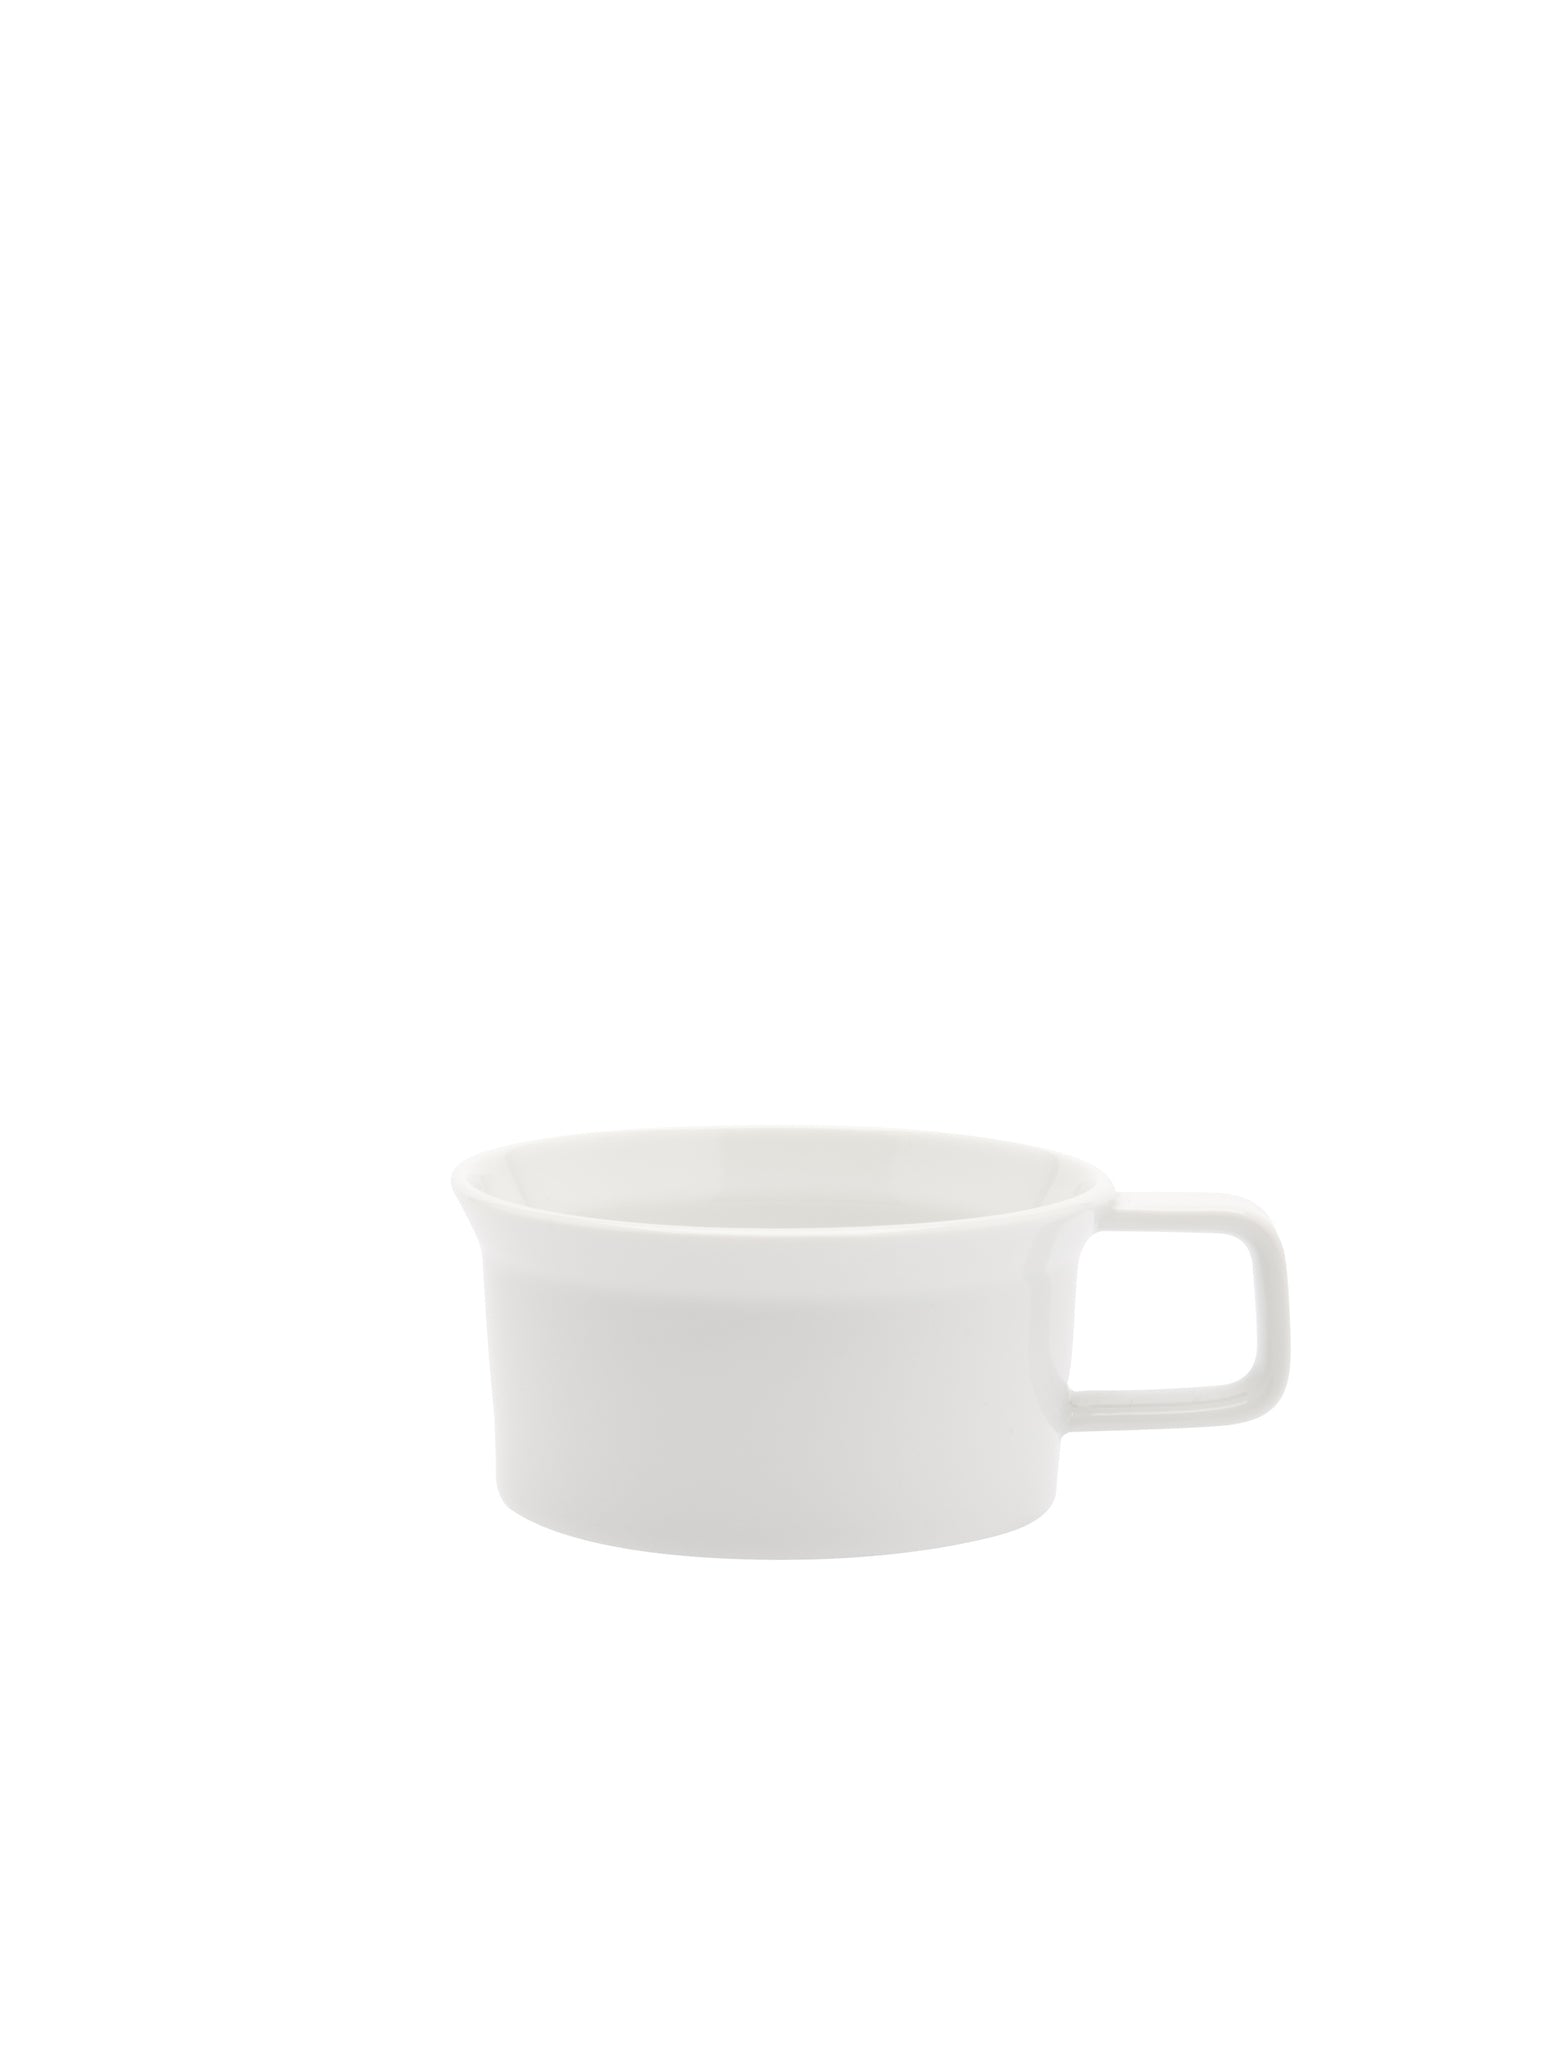 TY Tea Cup handle glazed white